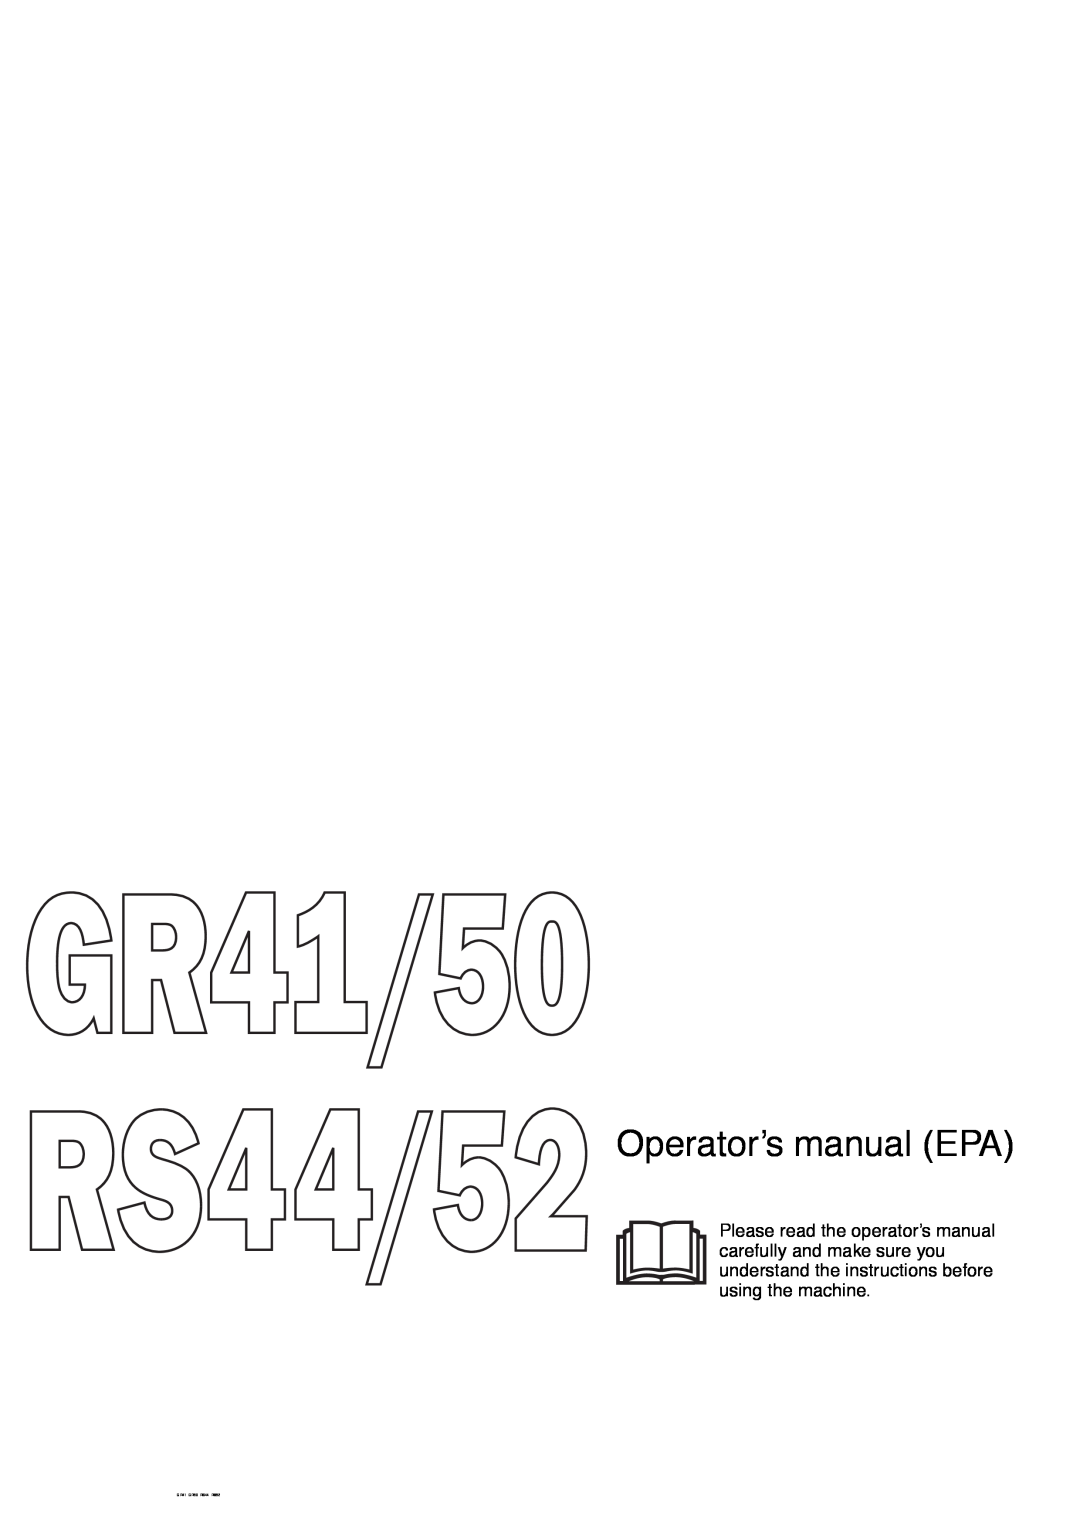 Jonsered GR41/50 manual Operator’s manual EPA, GR41 GR50 RS44 RS52 